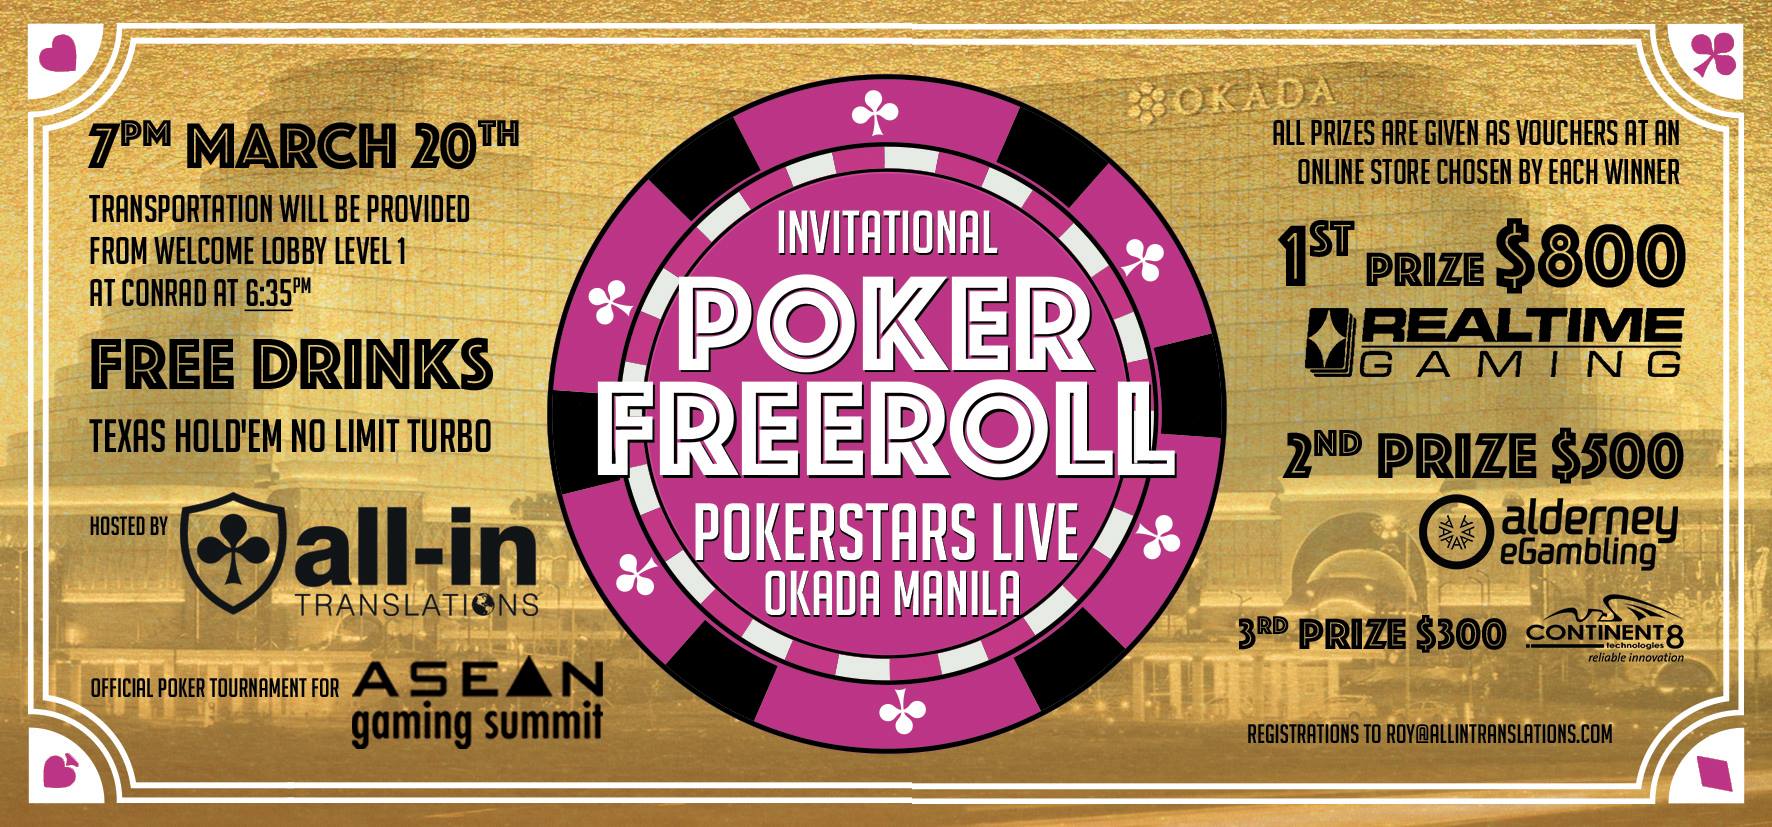 International Poker Freeroll Pokerstars Live Okada Manila